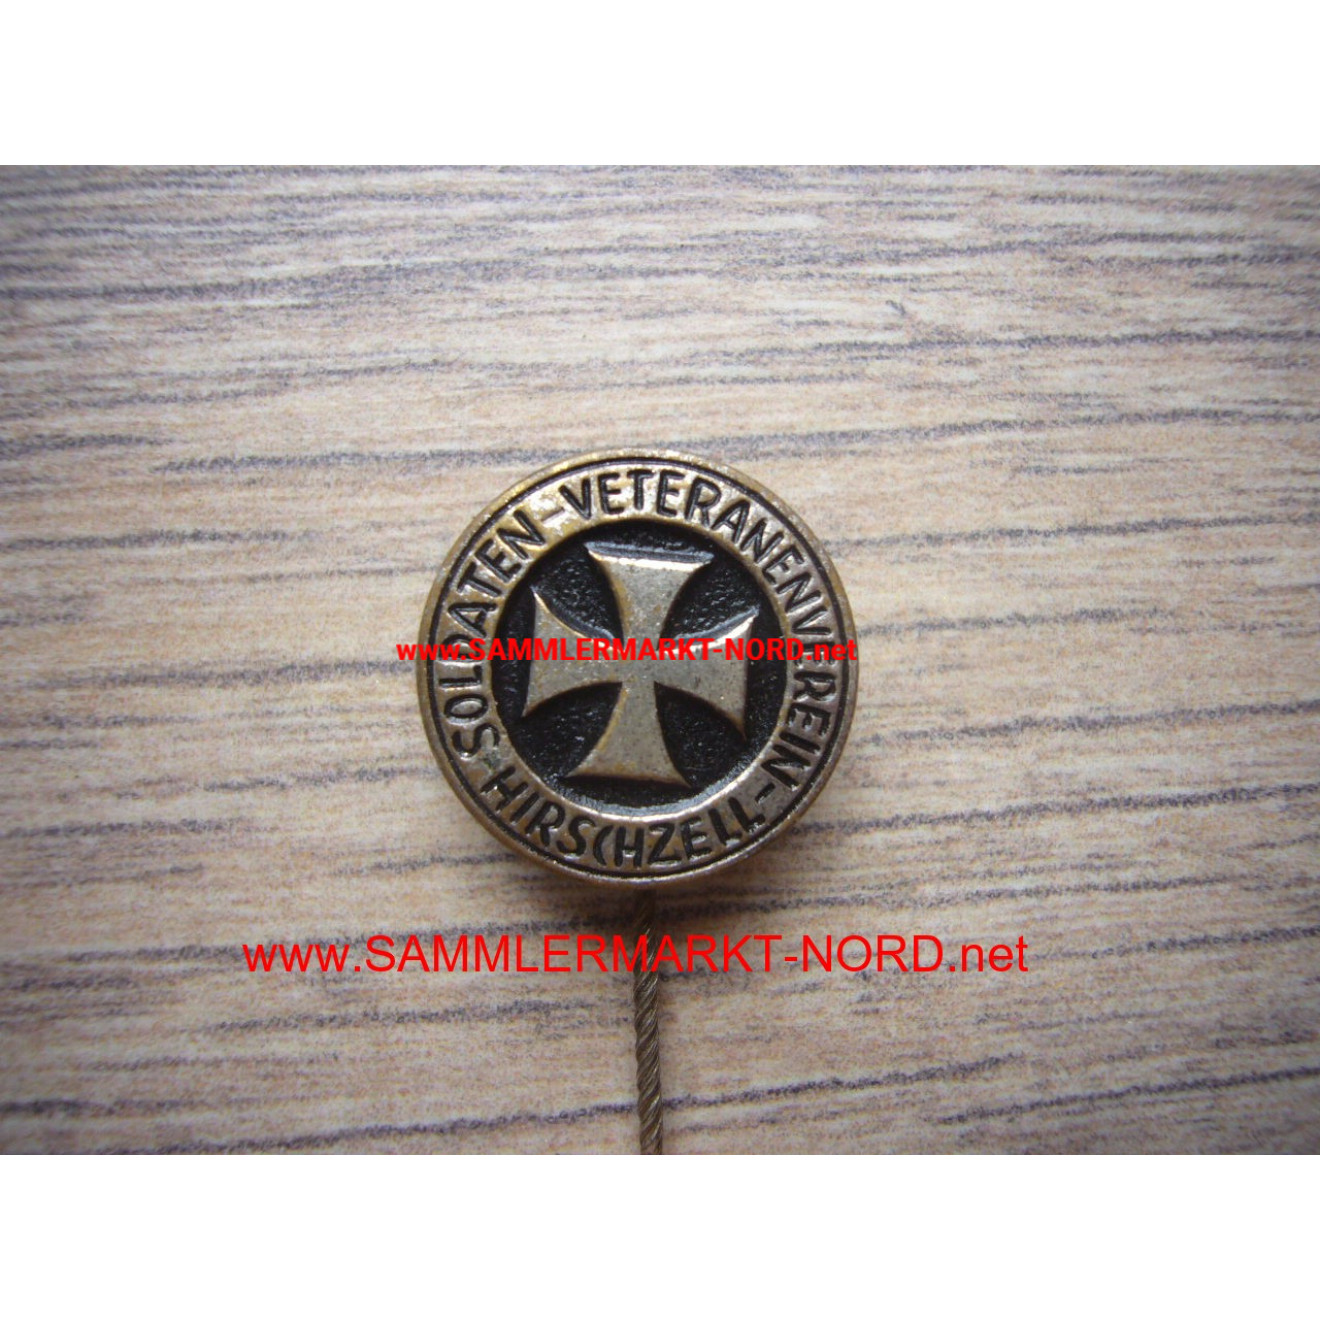 Soldier-veterans association Hischzell - Badge